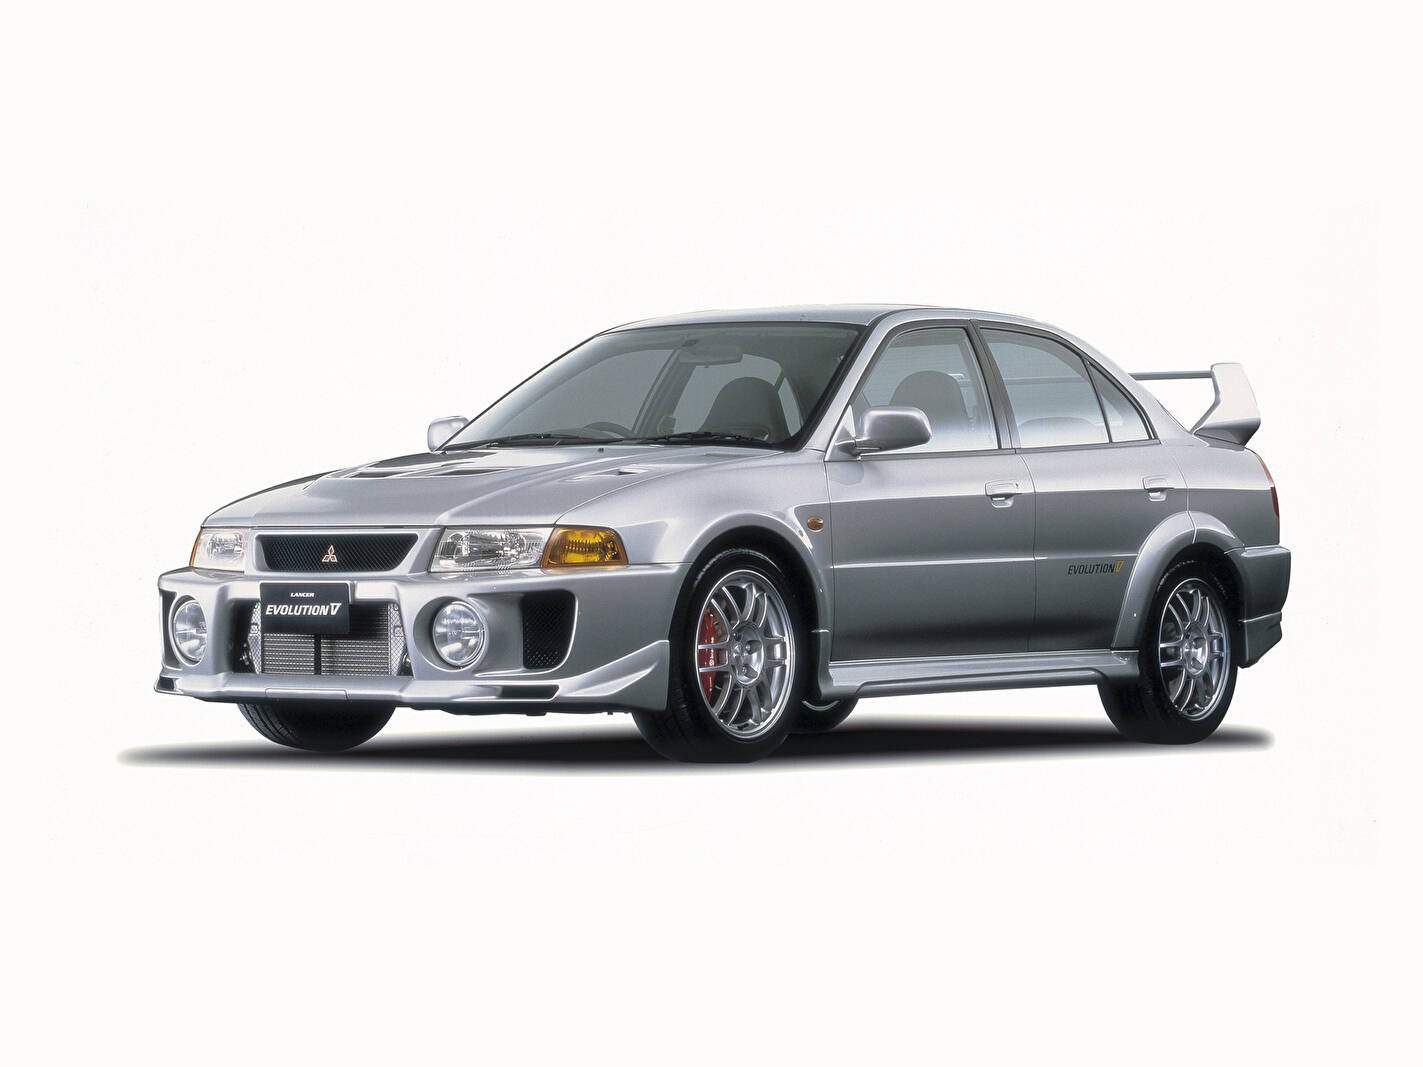 1998 Mitsubishi Lancer GSR Evolution V